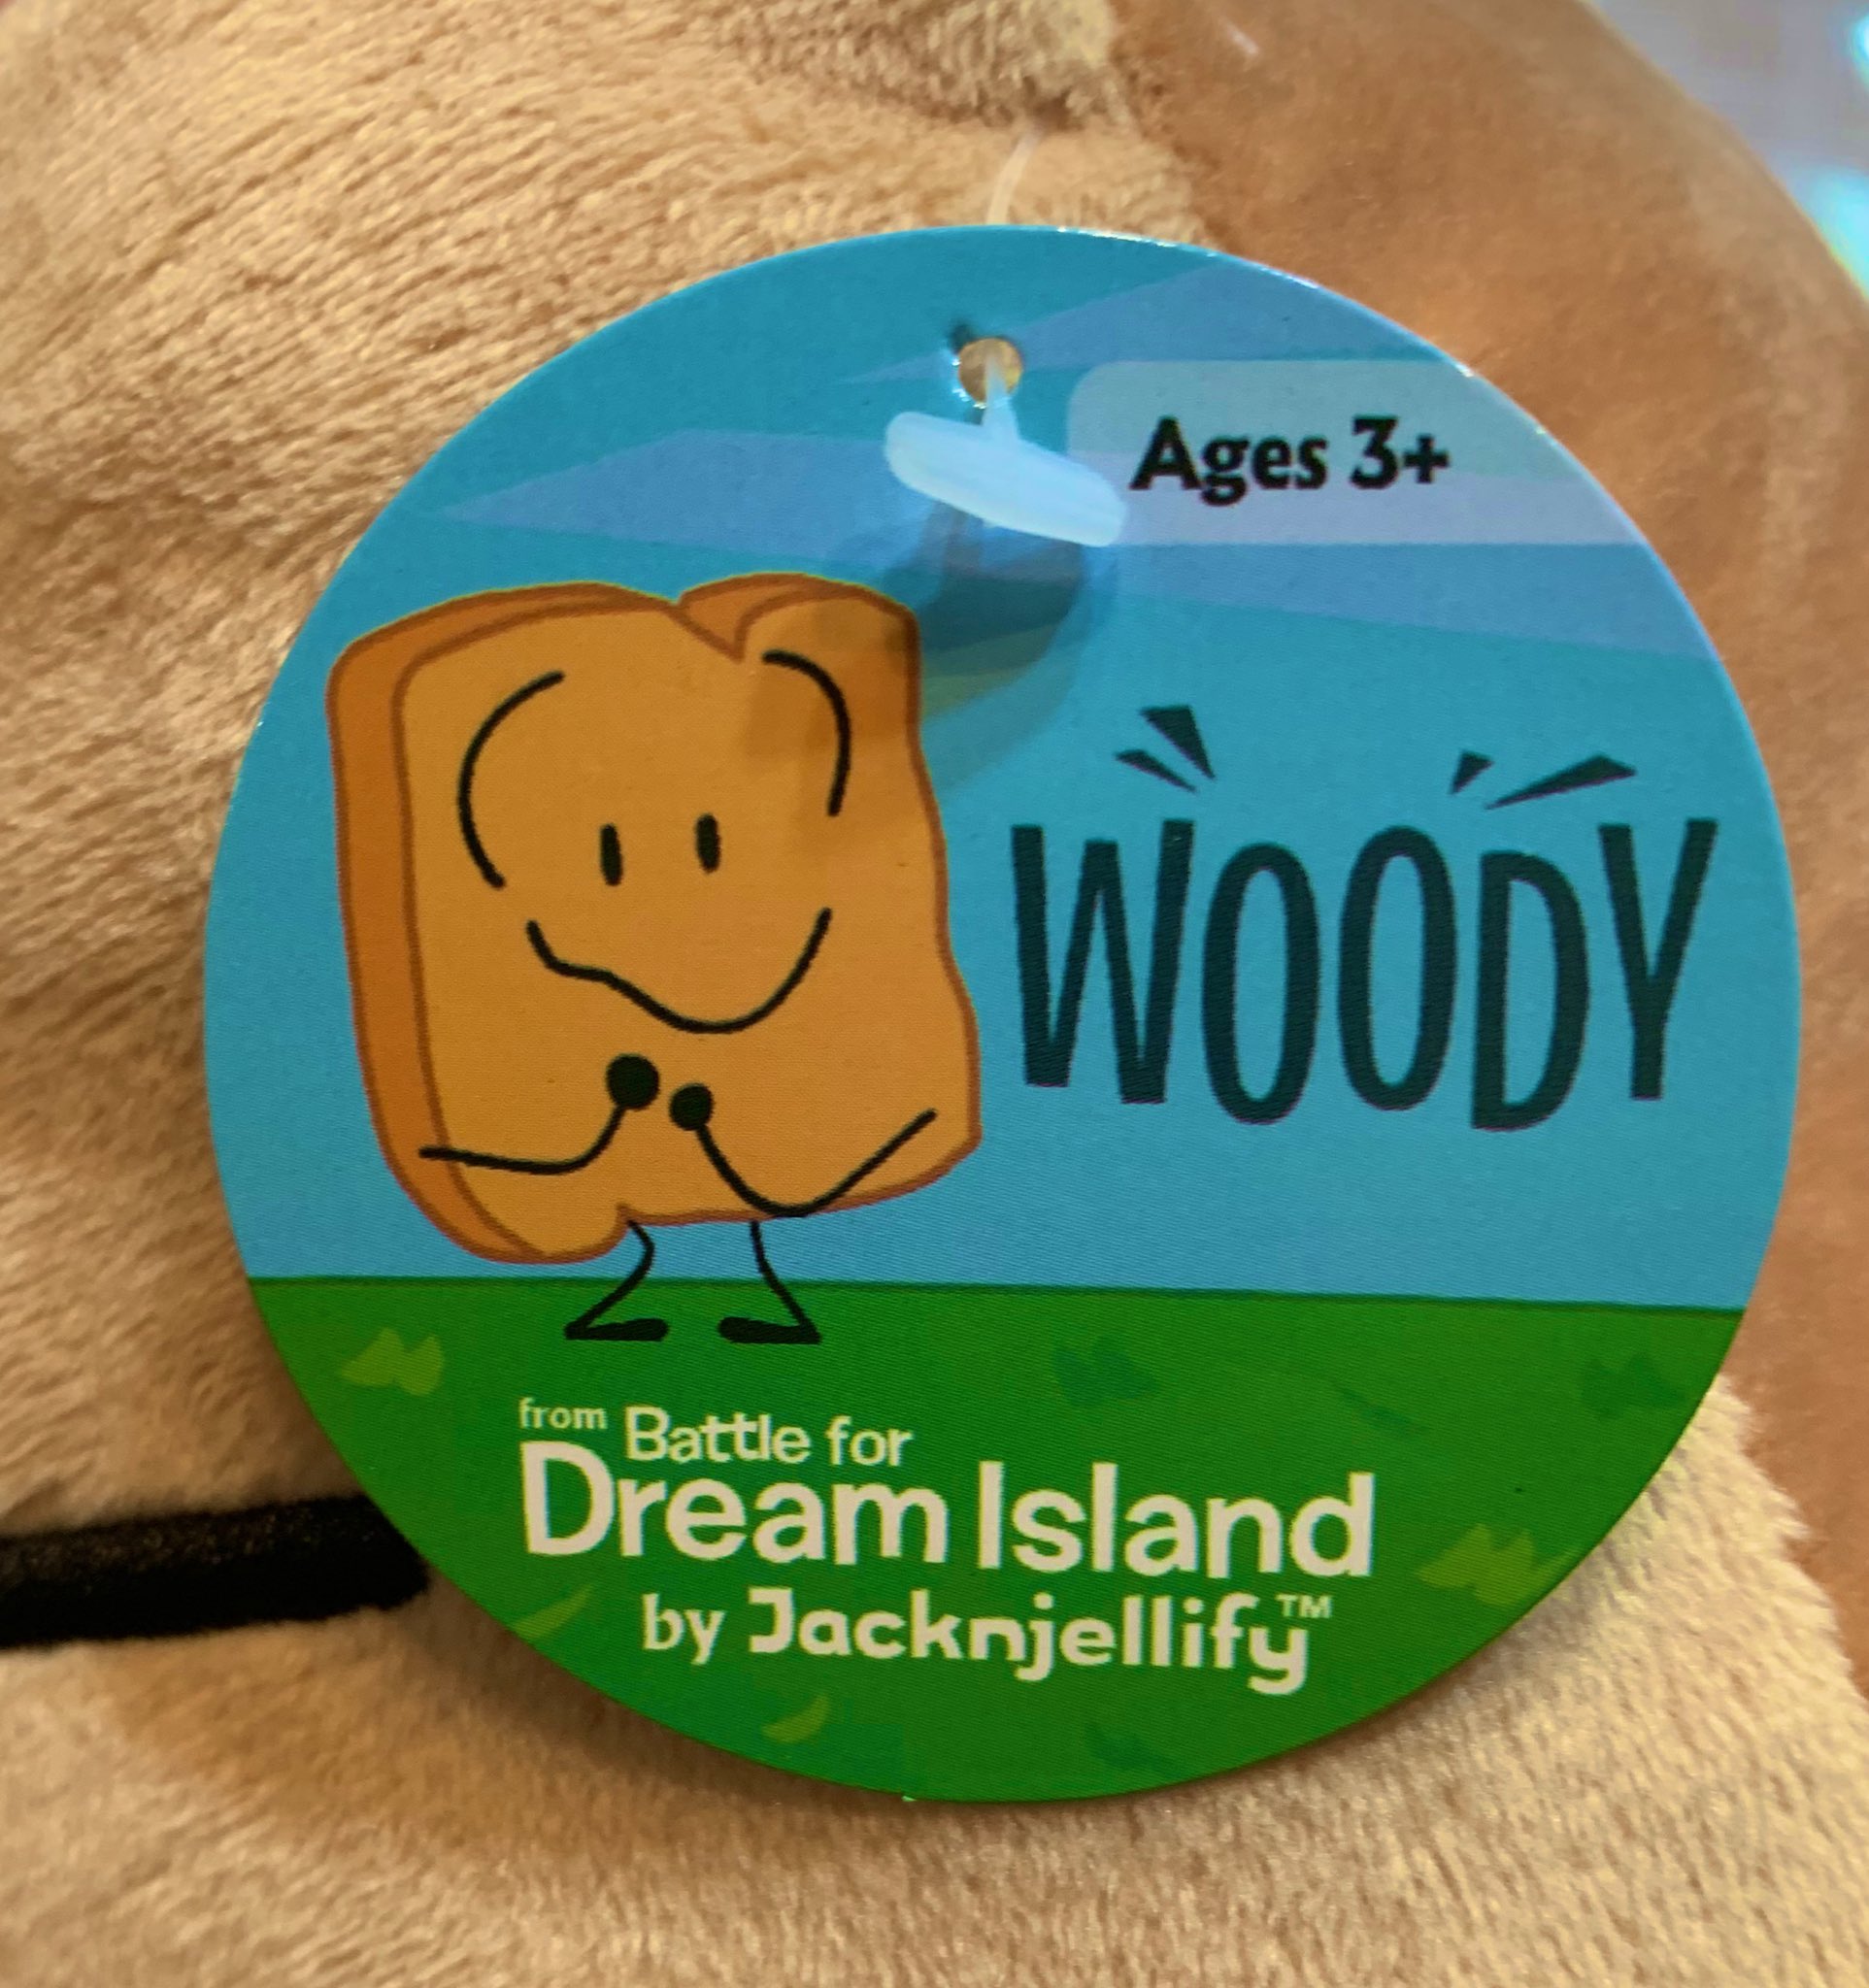 Woody Plush – Jacknjellify